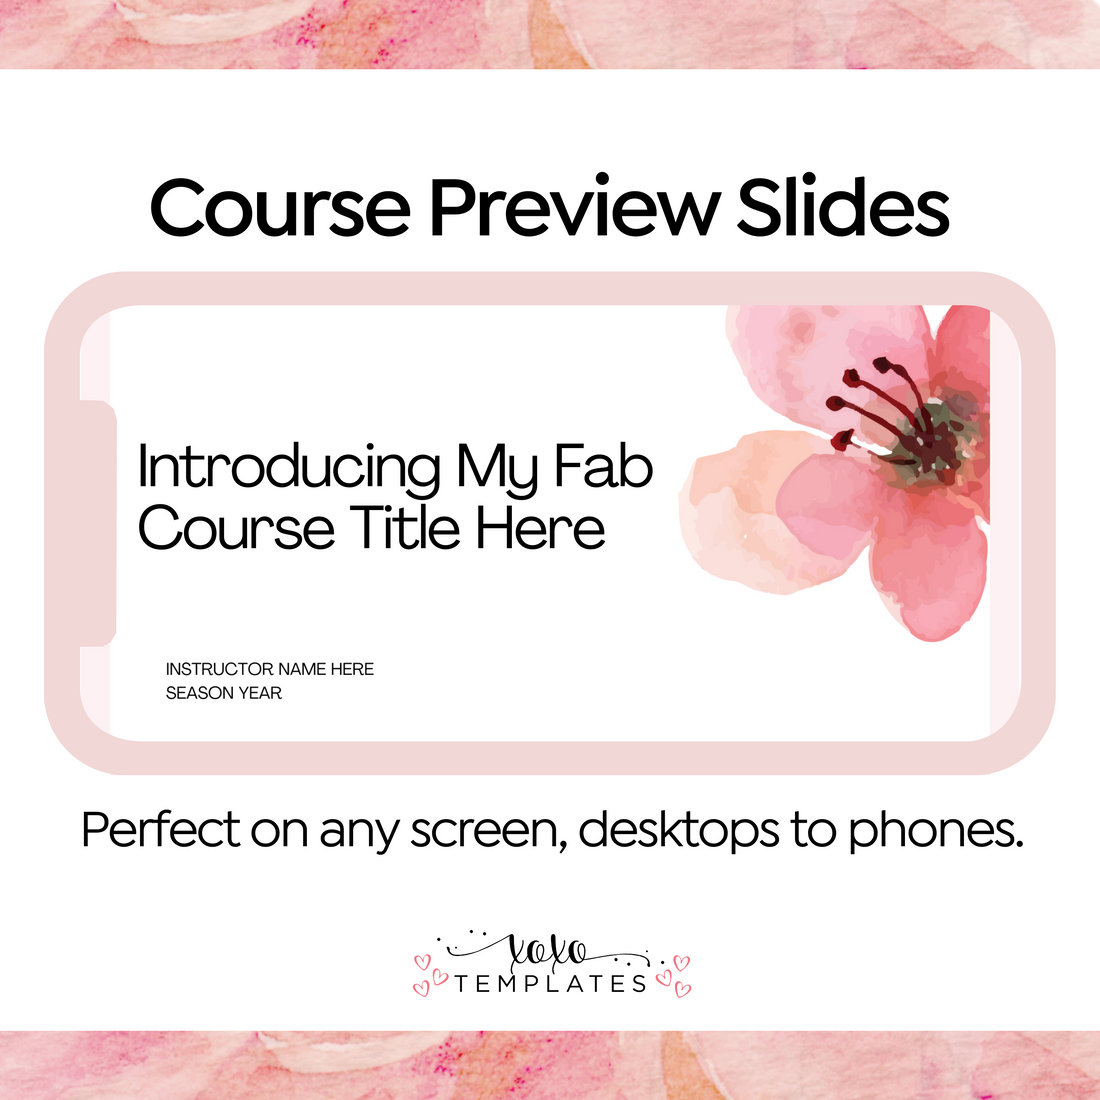 Course Preview Slides